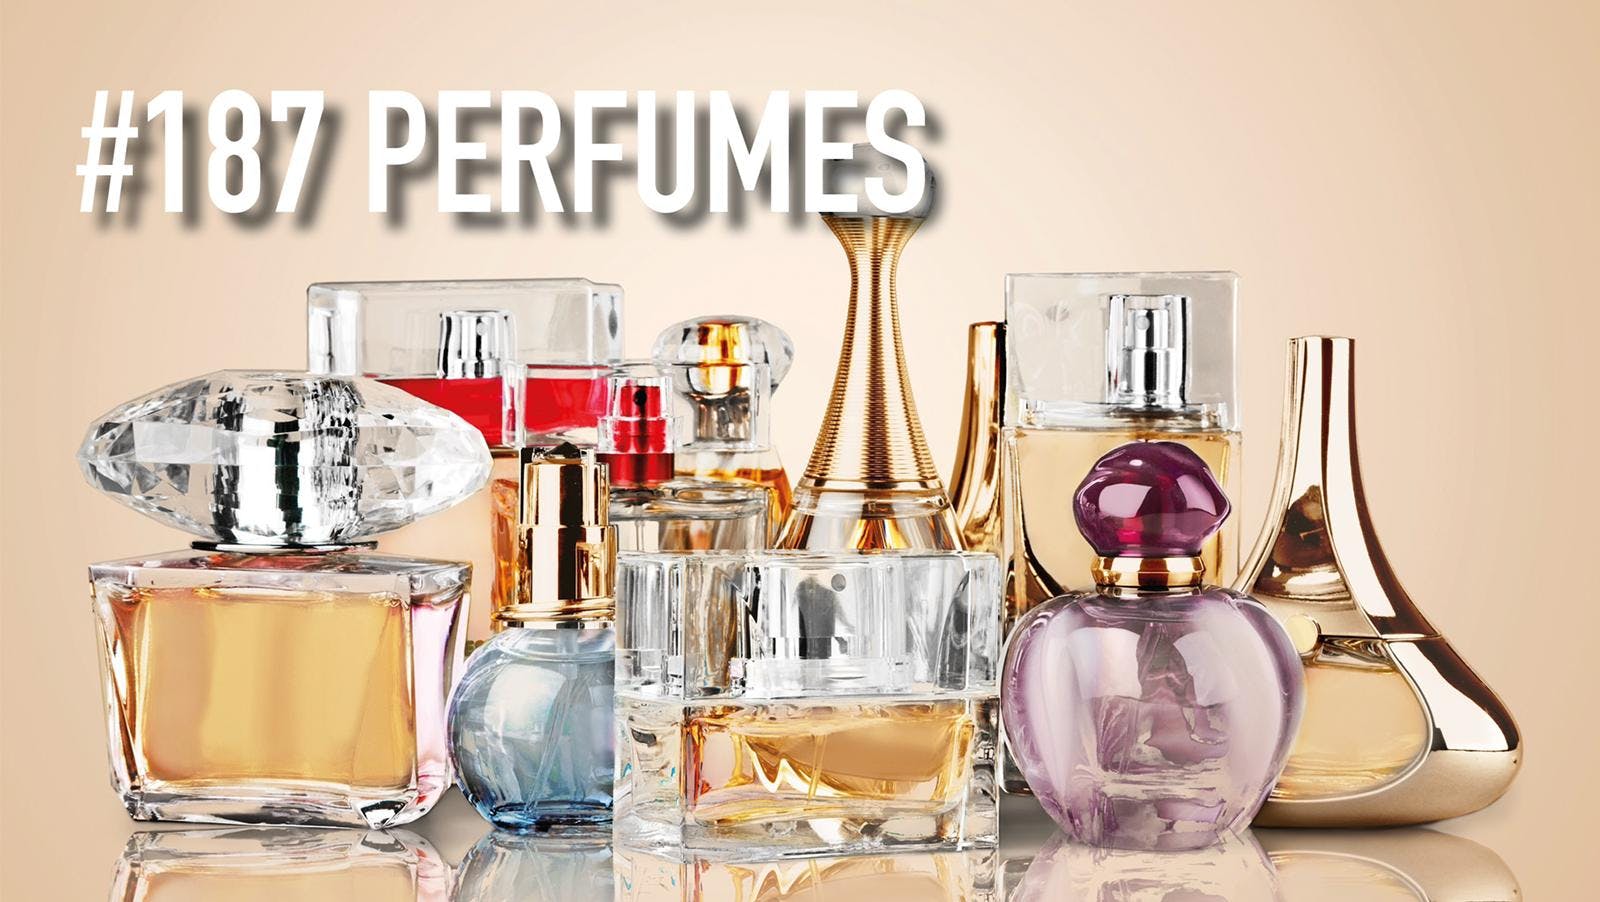 Perfumes (#187)